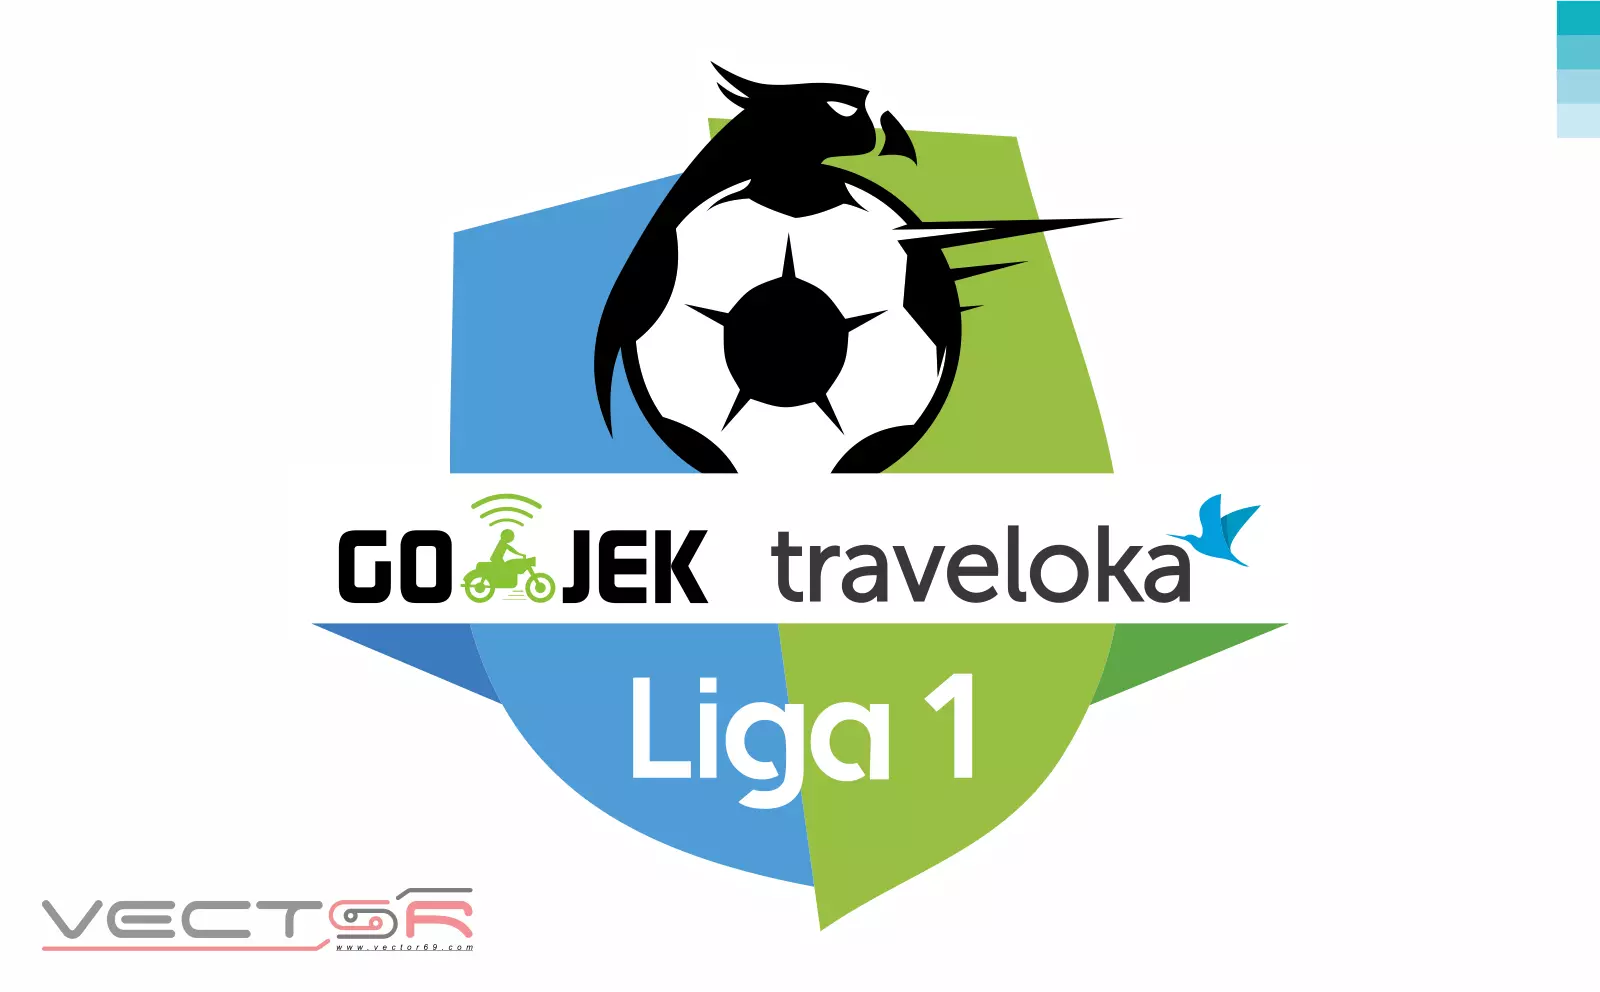 Gojek Traveloka Liga 1 Indonesia Logo - Download Vector File SVG (Scalable Vector Graphics)